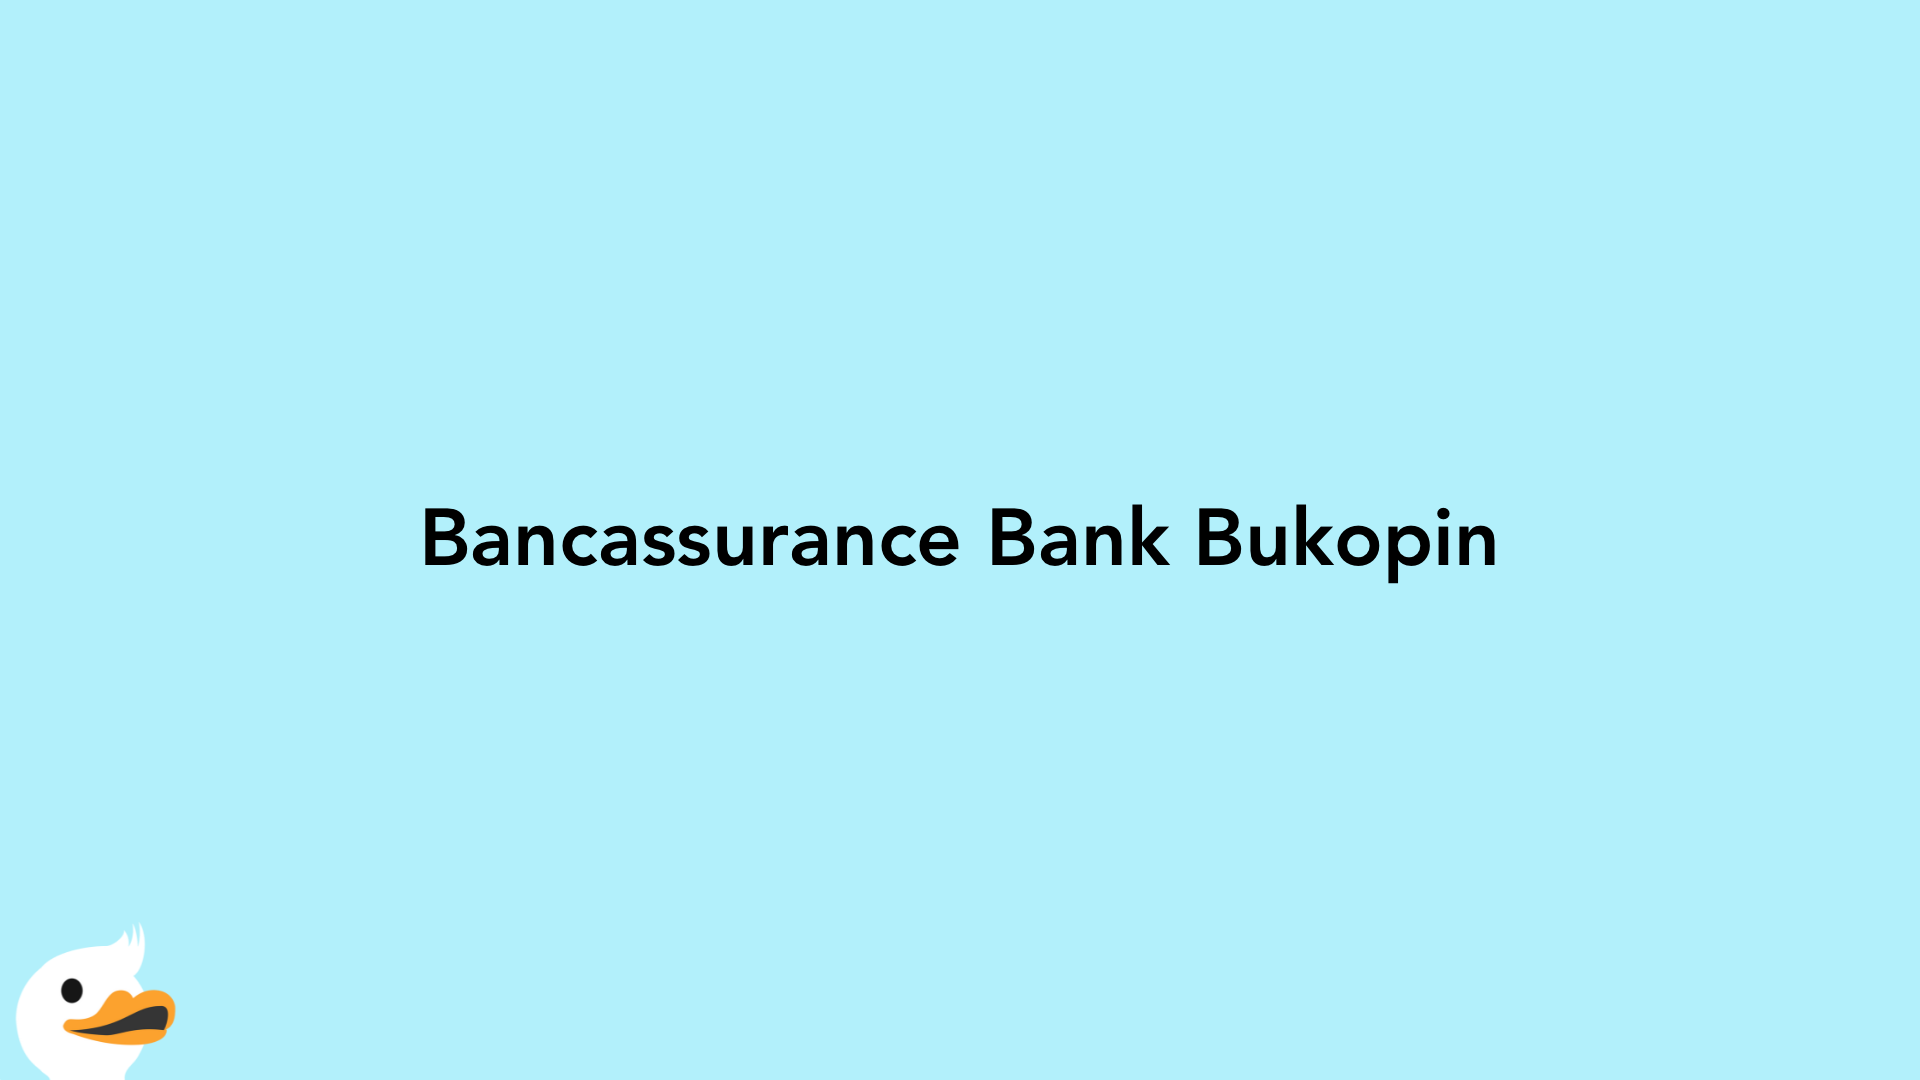 Bancassurance Bank Bukopin